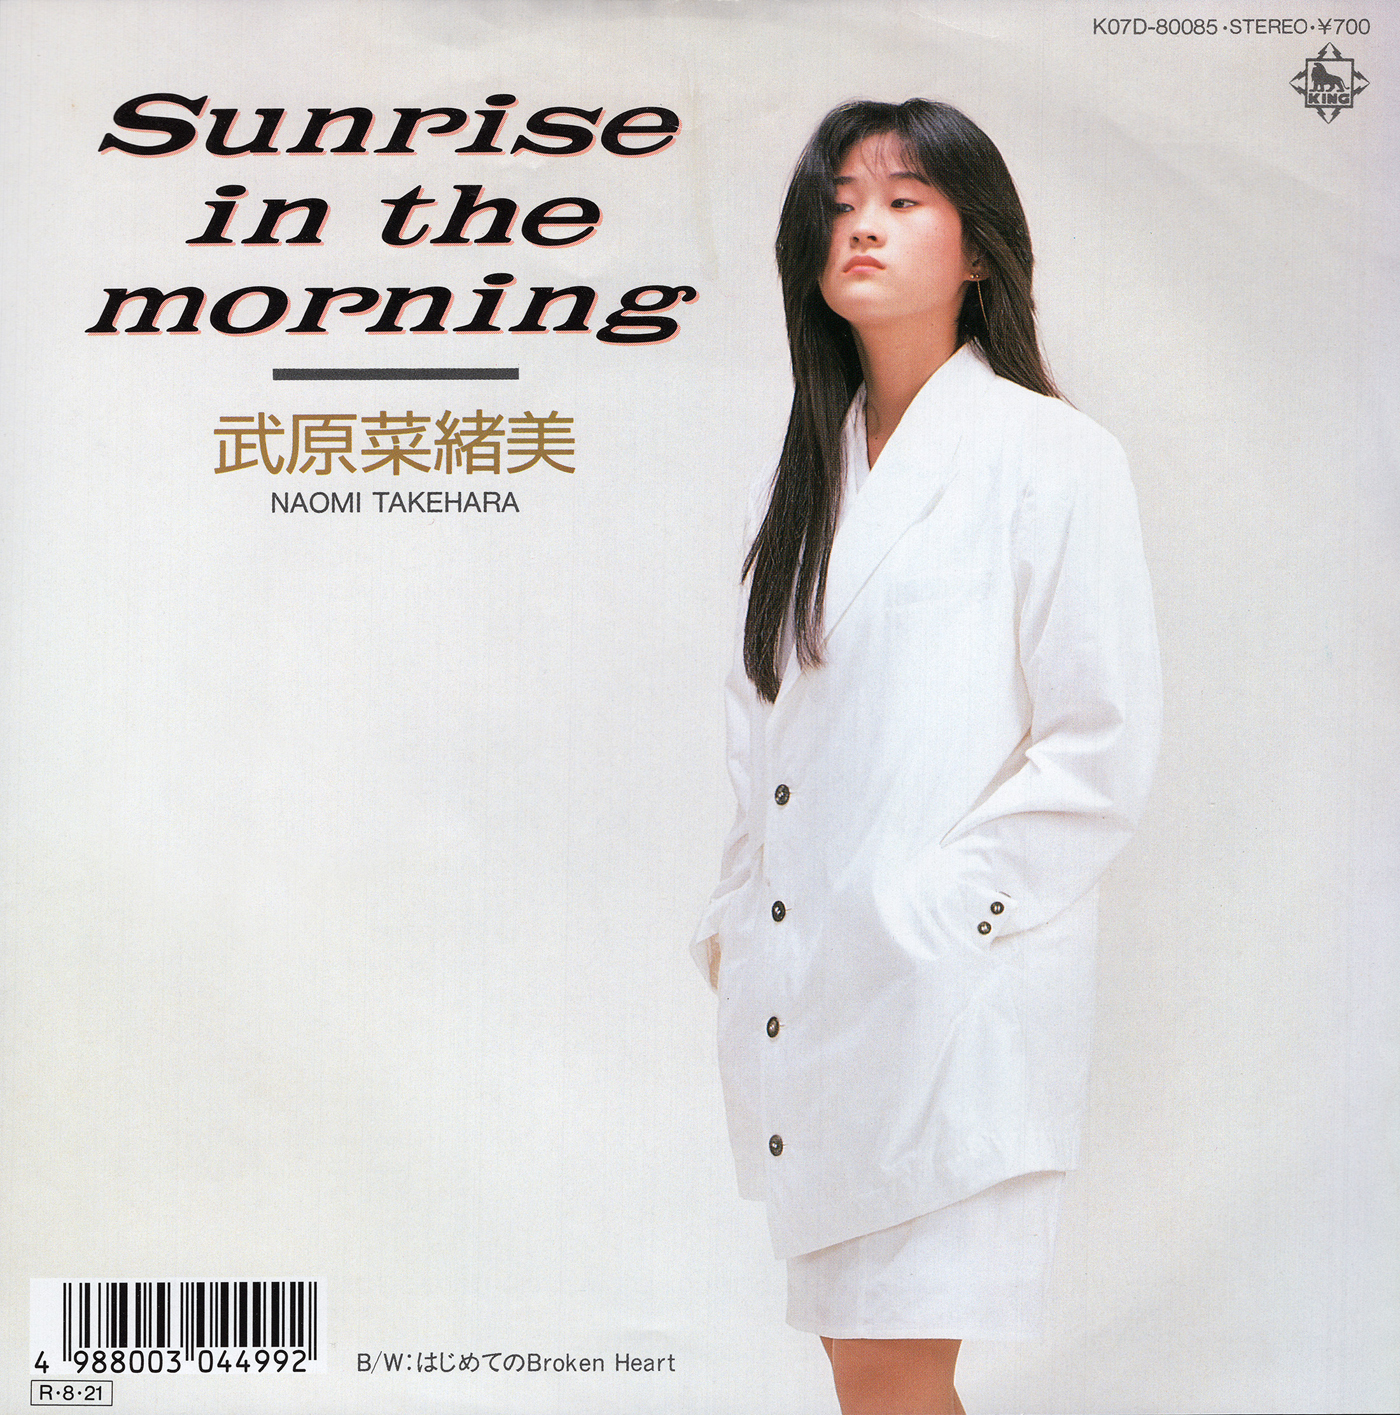 20180624.1628.05 Naomi Takehara - Sunrise in the morning (1988) (FLAC) cover.jpg